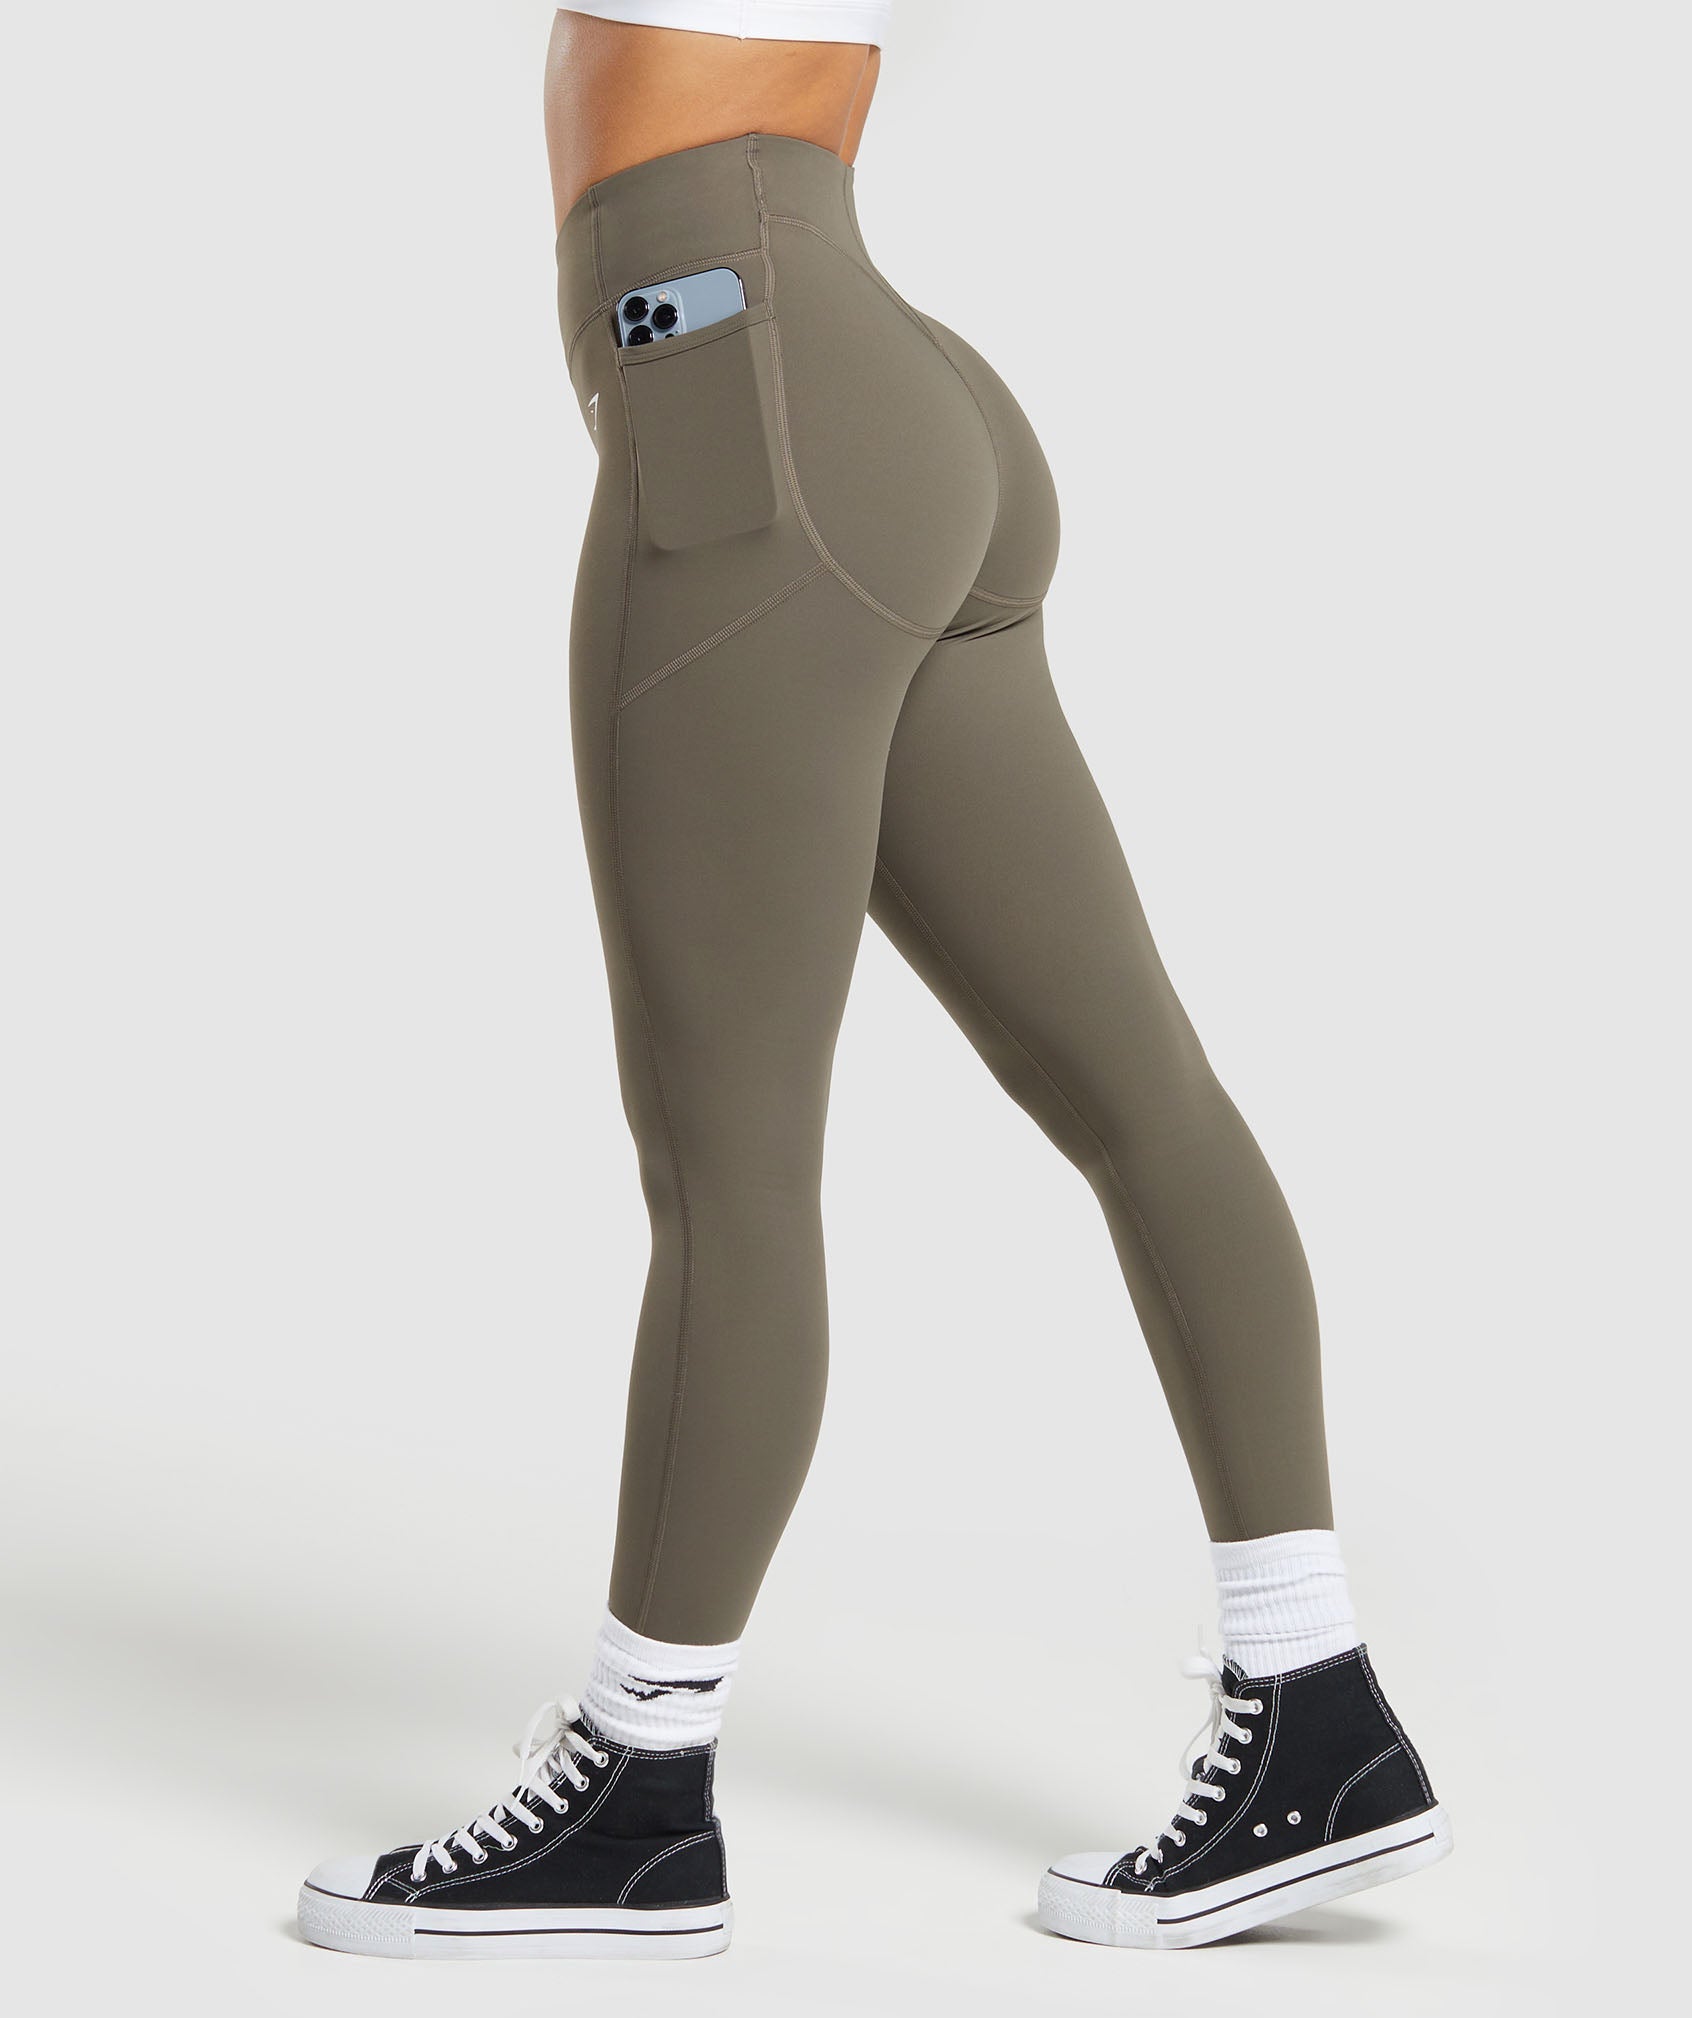 Gymshark leggings 2 side pockets to store - Depop